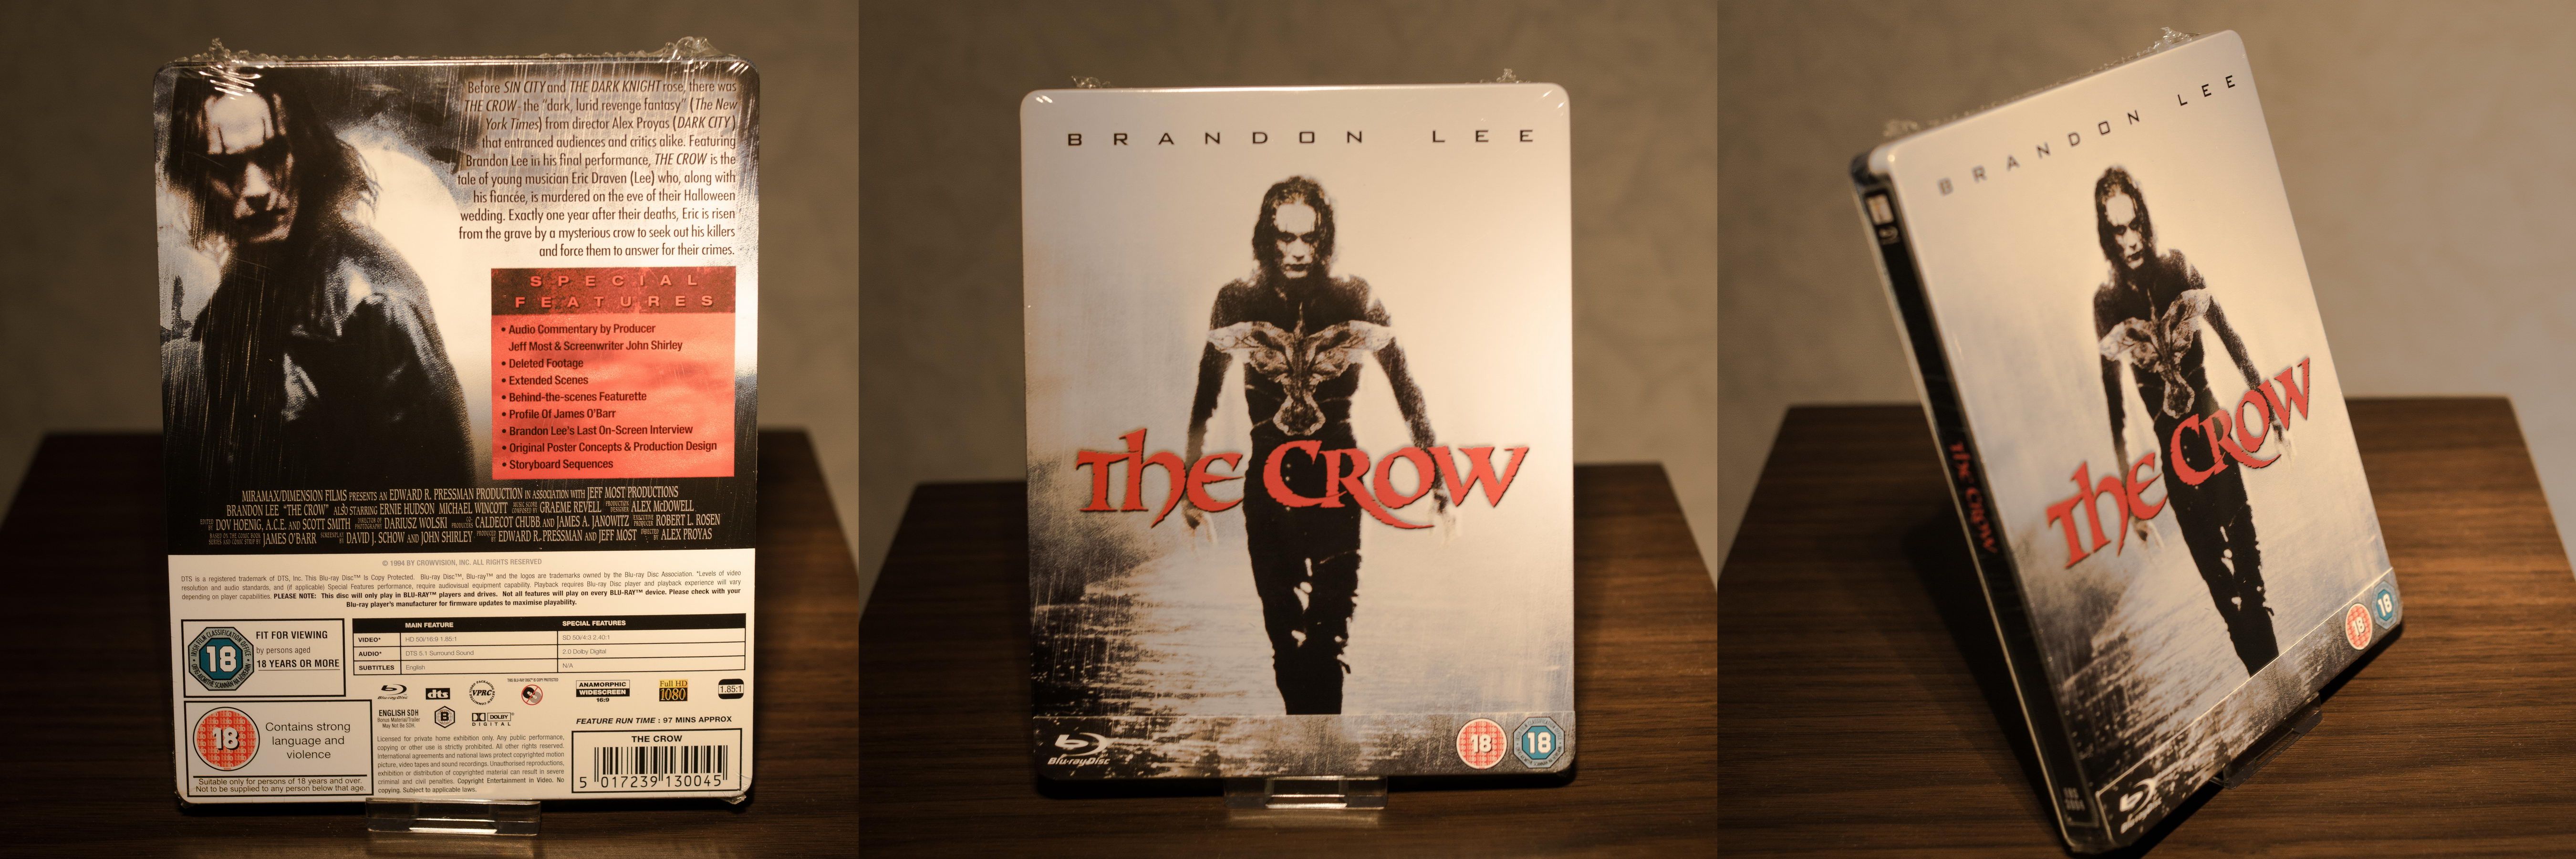 The Crow Zavvi Steelbook